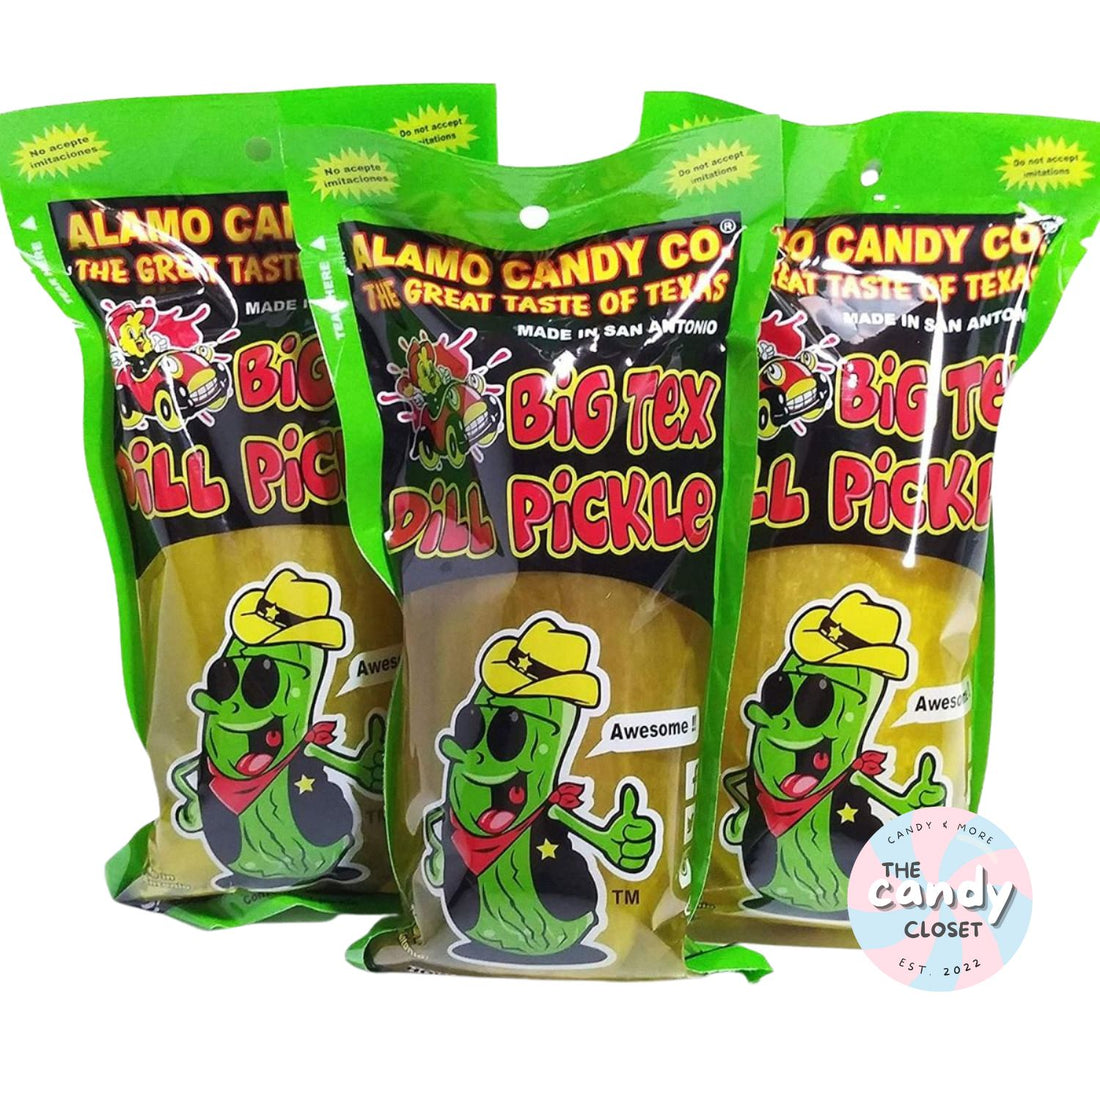 Alamo Candy Co. Big Tex Dill Pickle